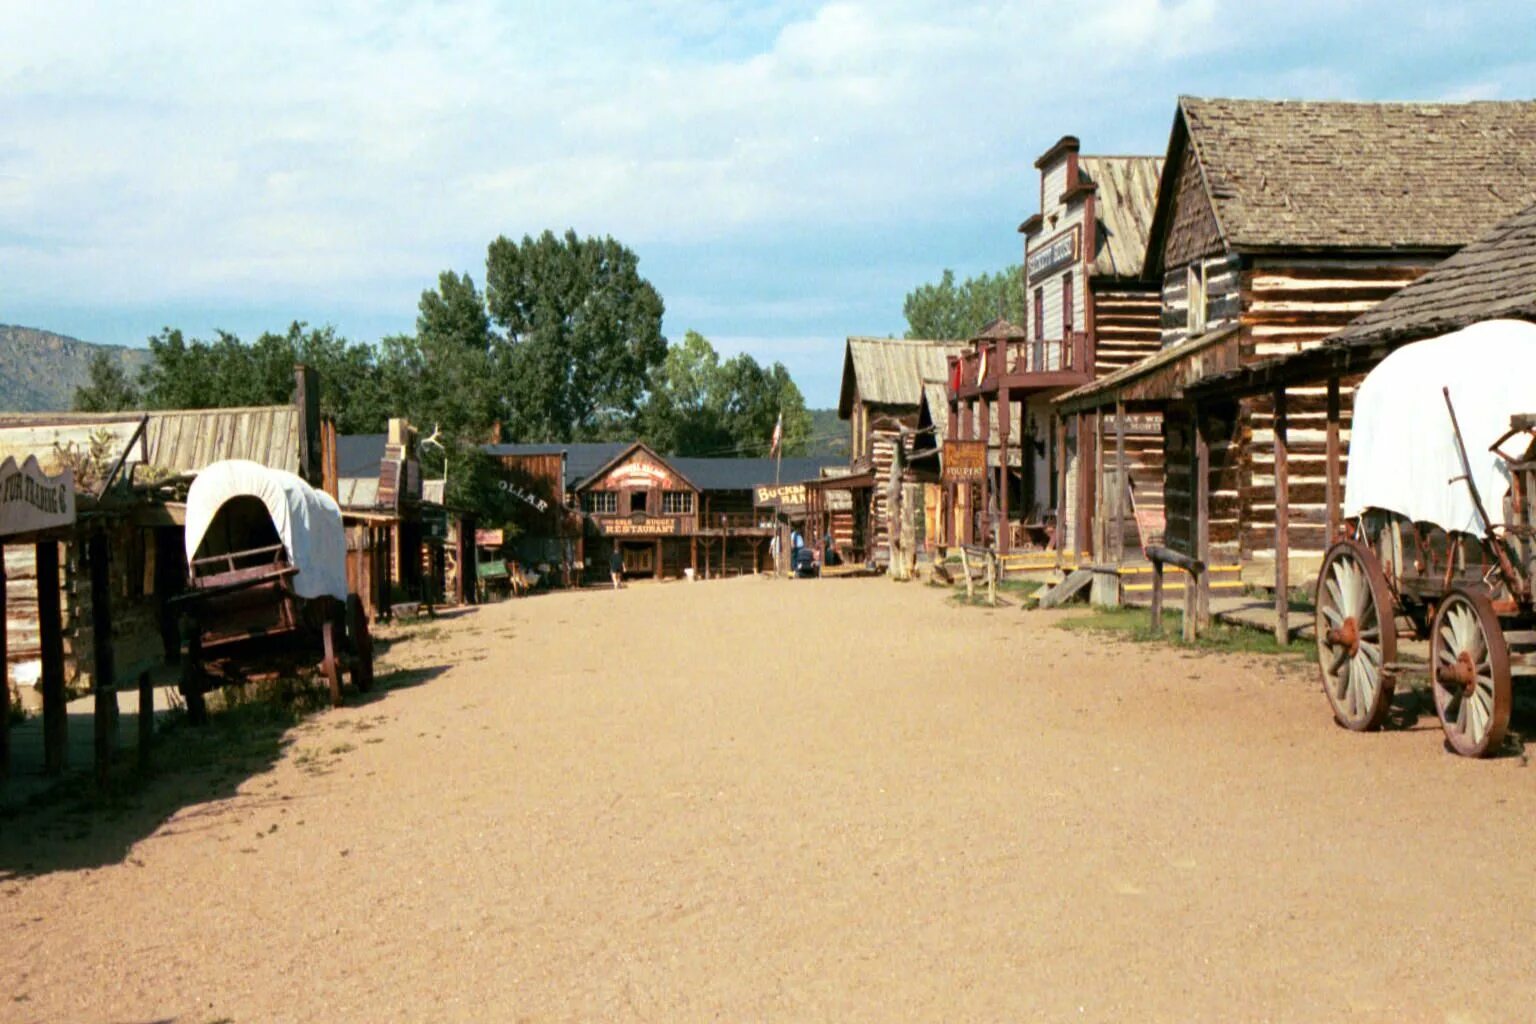 Америка ковбойская деревня. Дикий Запад Колорадо. Штат Канзас дикий Запад. Дикий Запад деревня. Город ковбоев